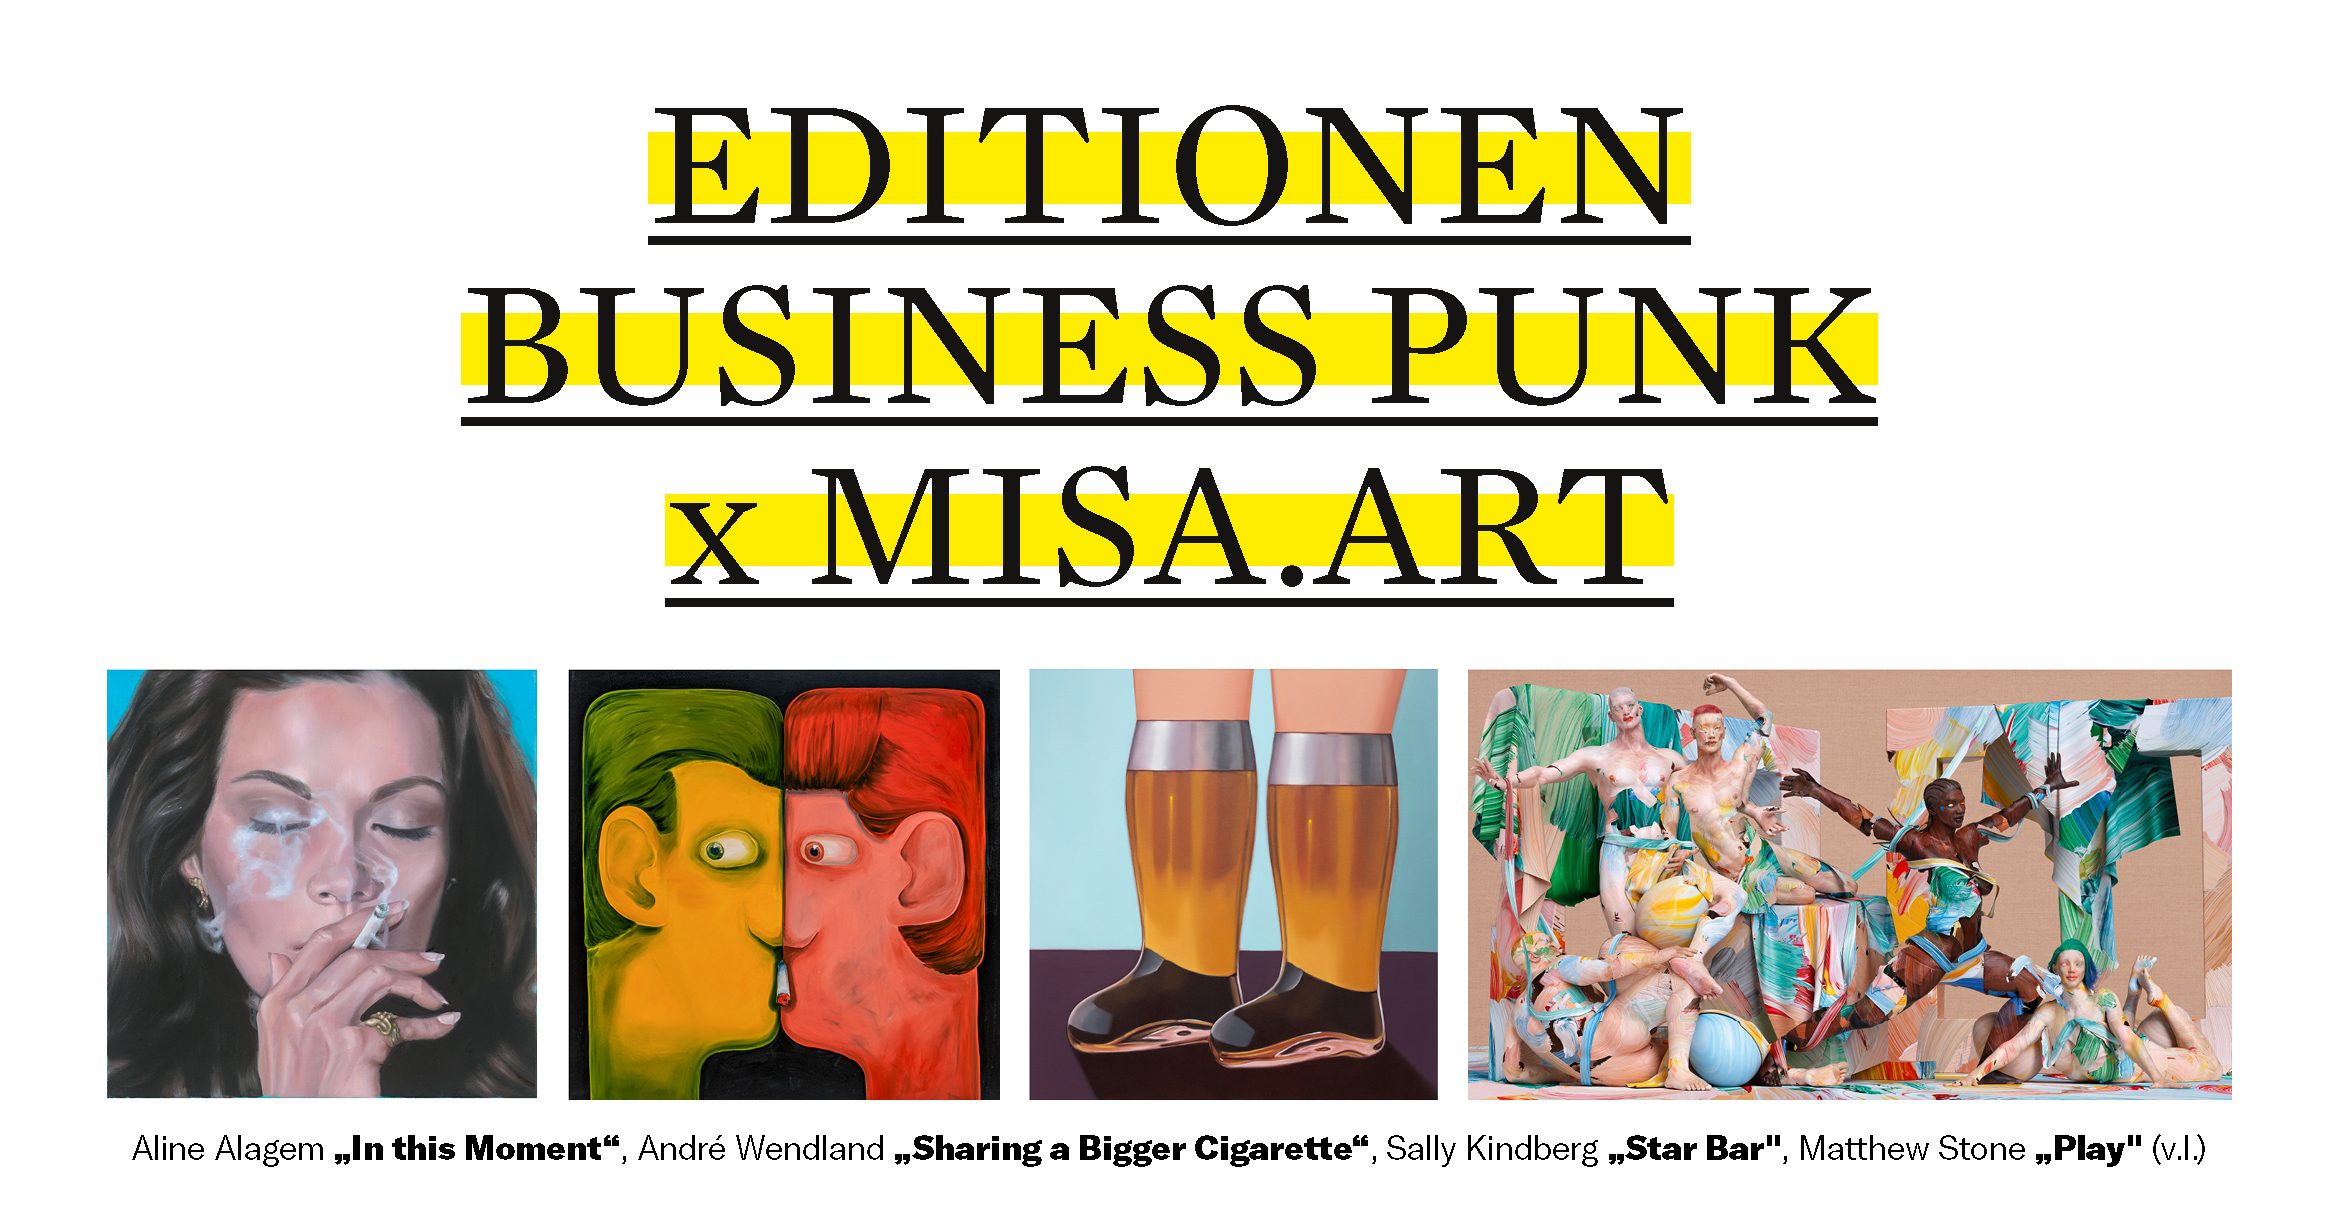 KUNSTEDITIONEN: BUSINESS PUNK X MISA ART